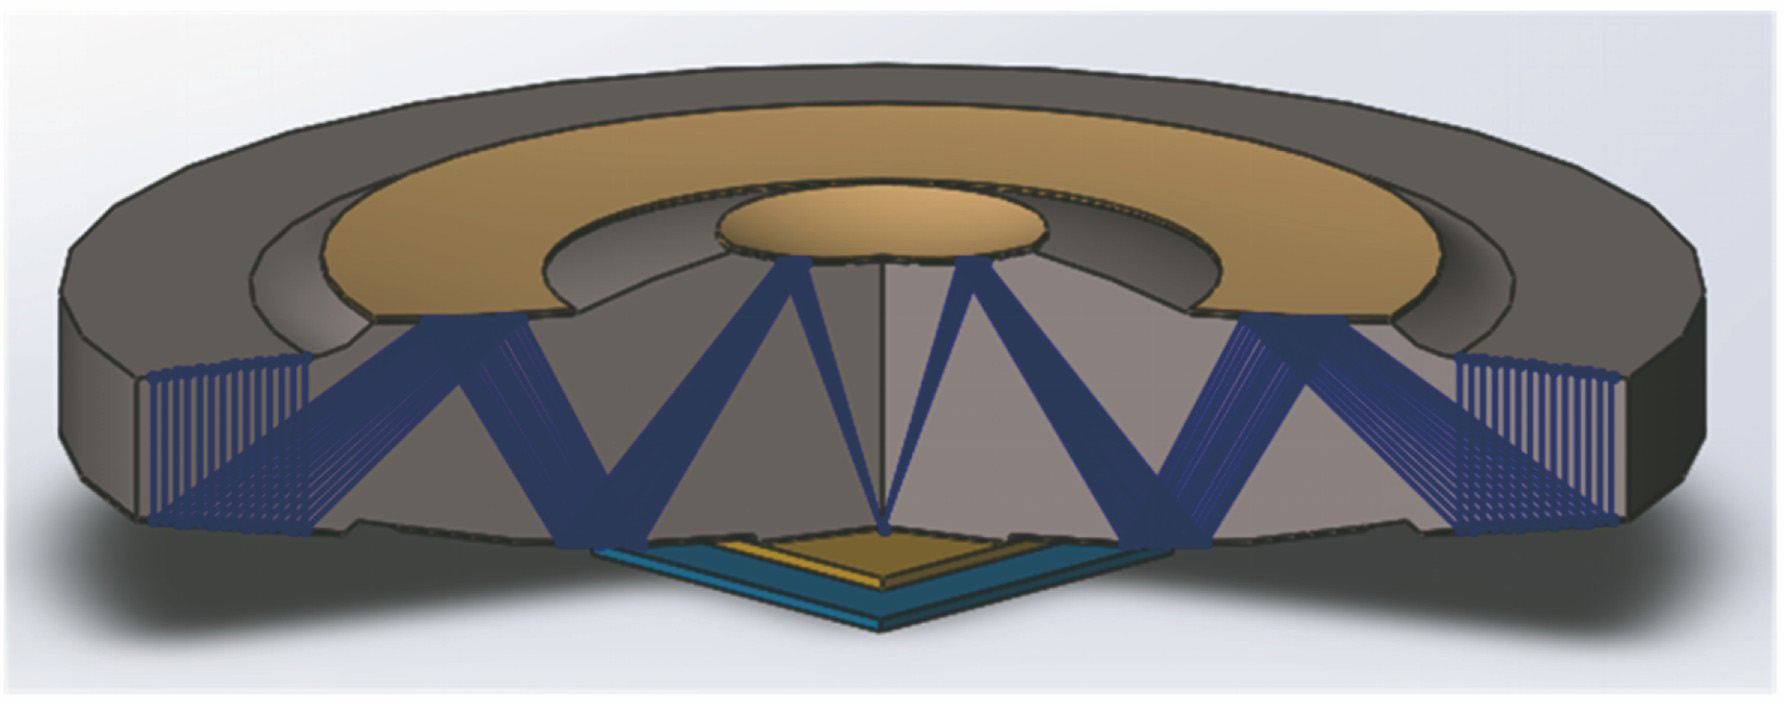 Monolithic multiple reflection optical system